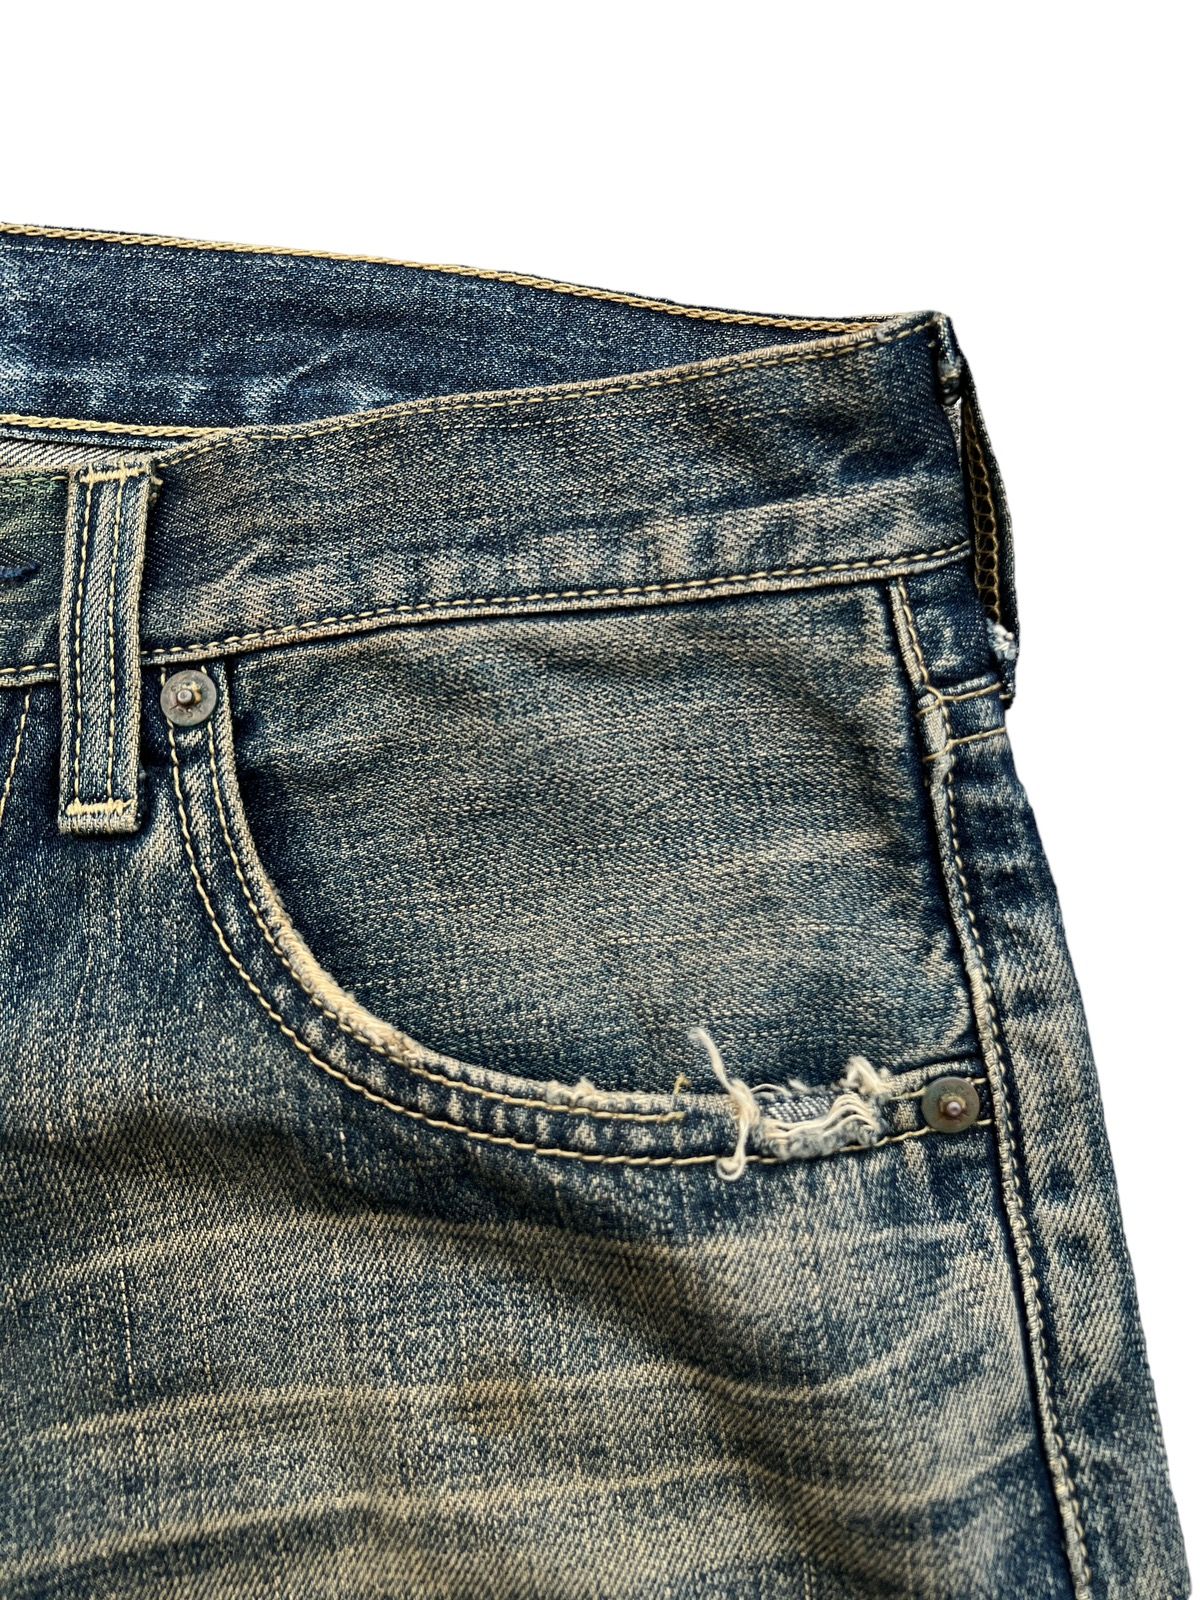 Vintage Levi’s 503 Distressed Rusty Denim Jeans 30x32 - 12